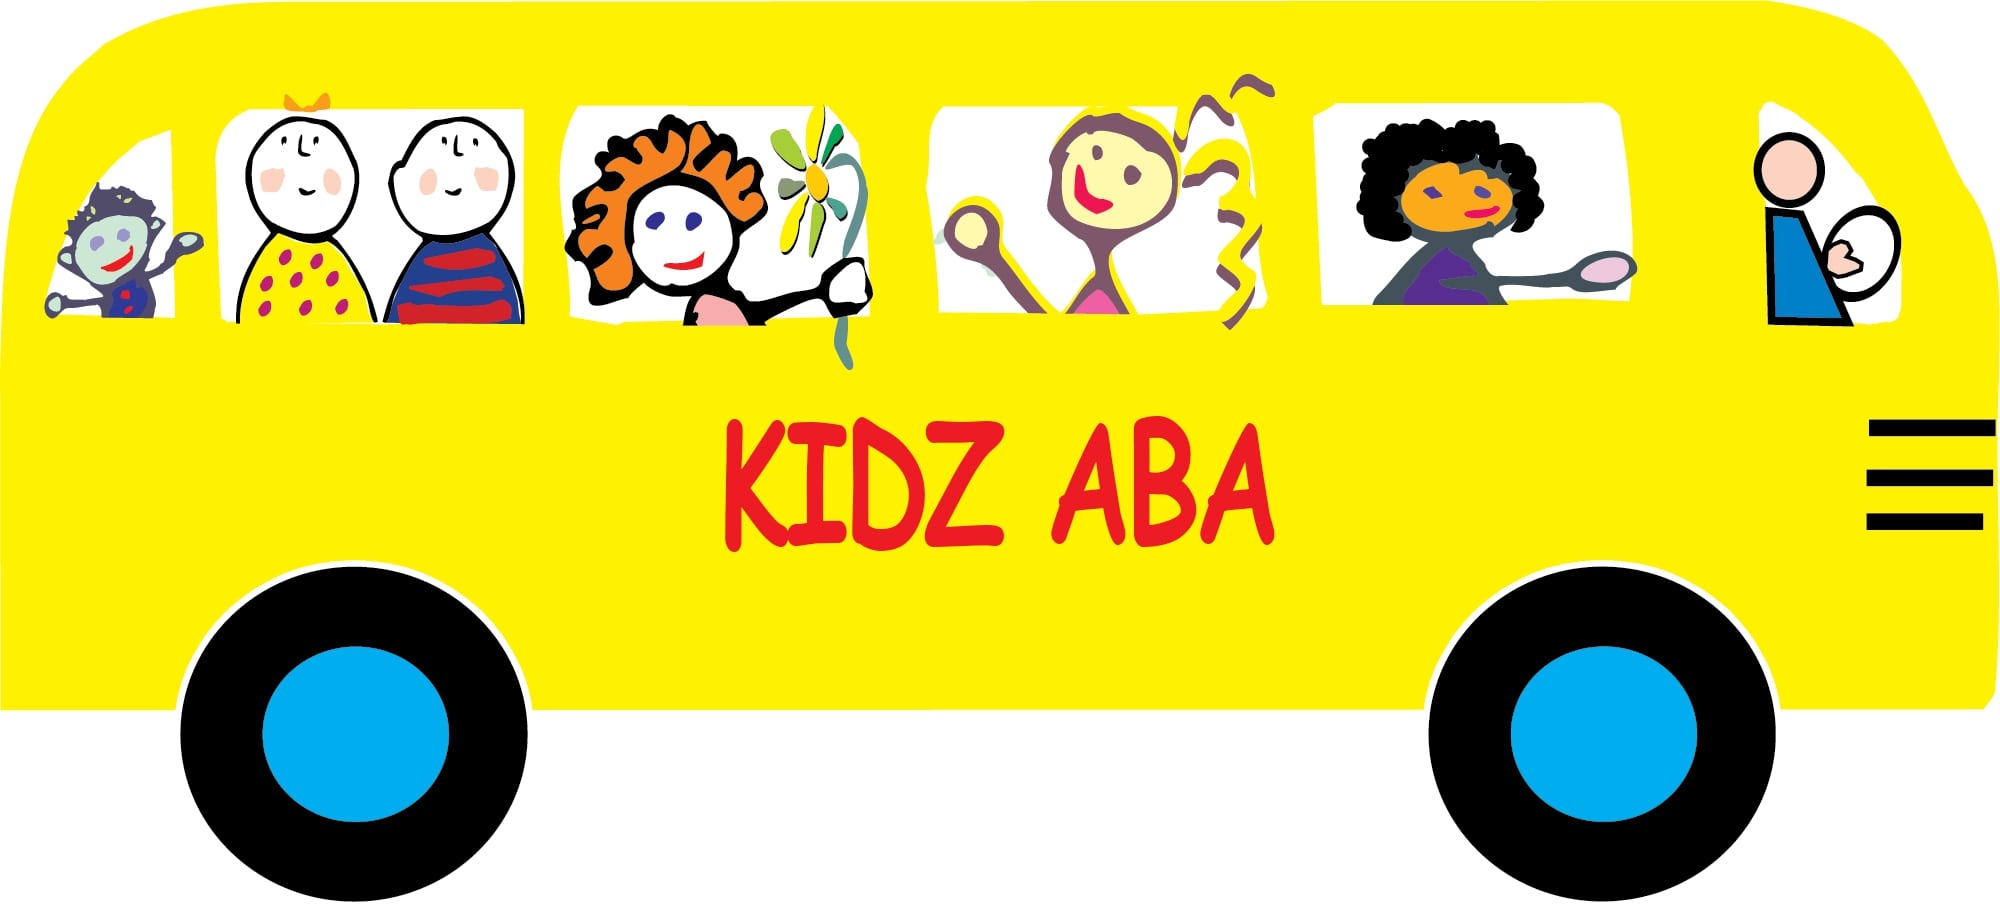 Family of Kidz - Kidz ABA 